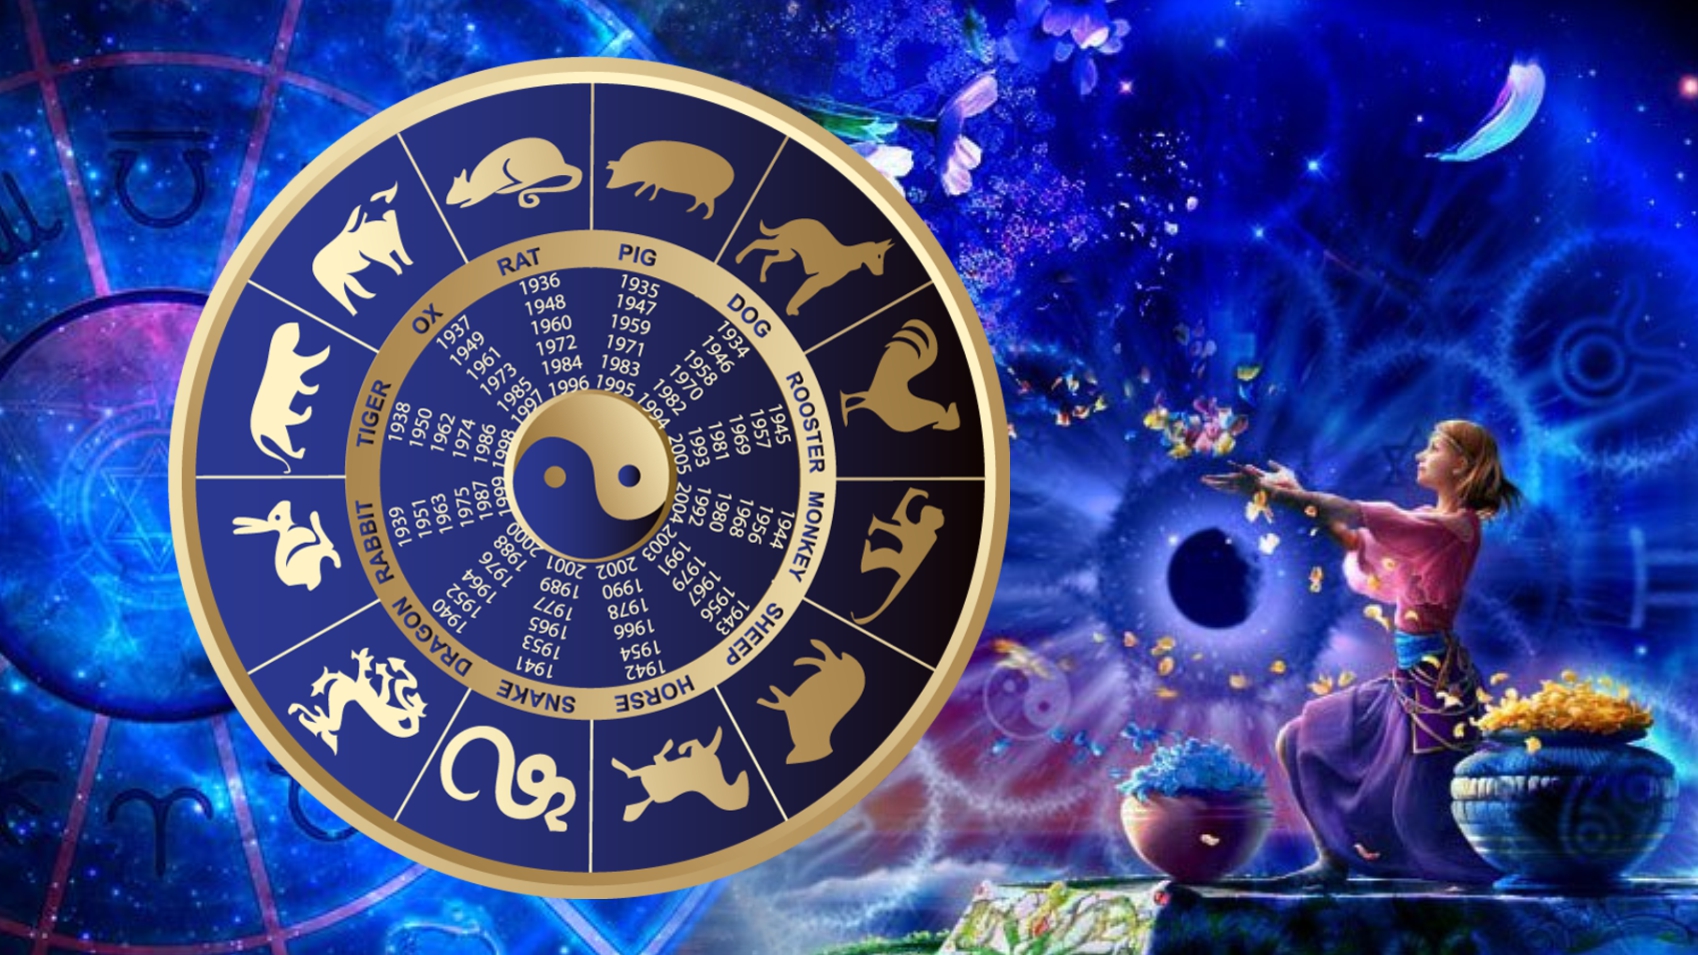 Dnevni horoskop za 26. oktobar 2018: Škorpije, uživajte u strasti; Lavovi, sudbina vas spaja sa srodnom dušom